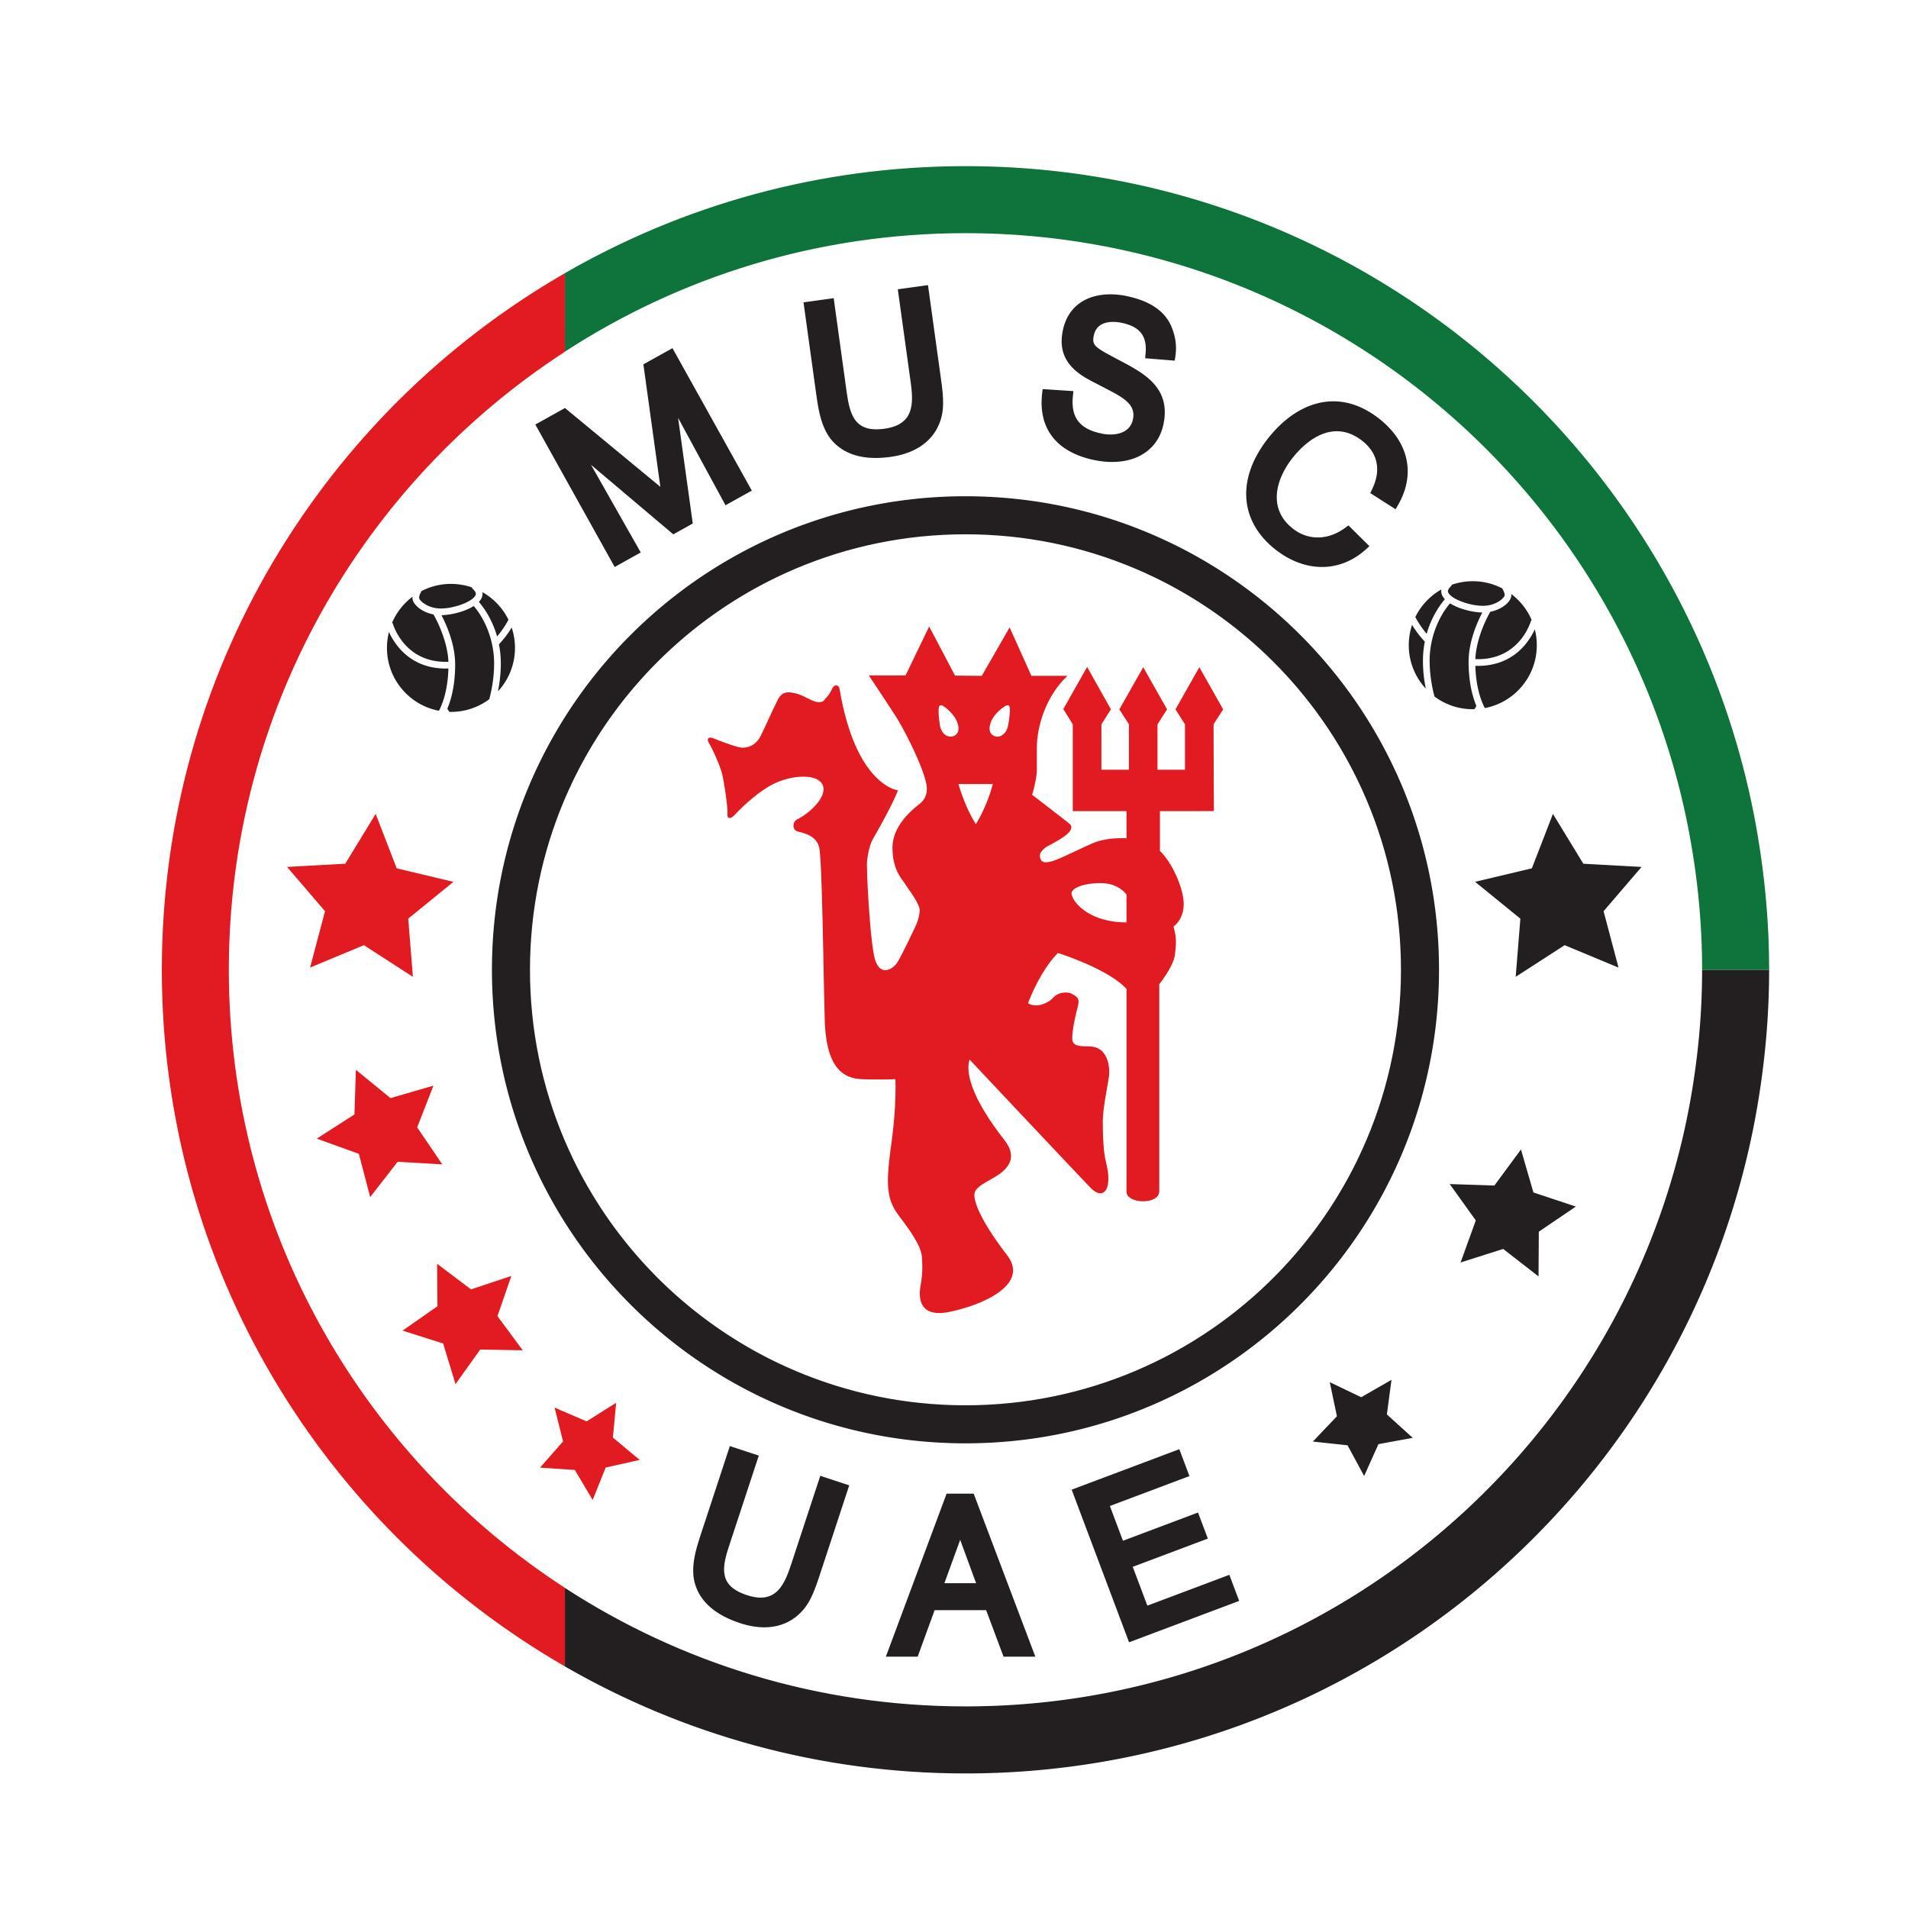 MUSC UAE